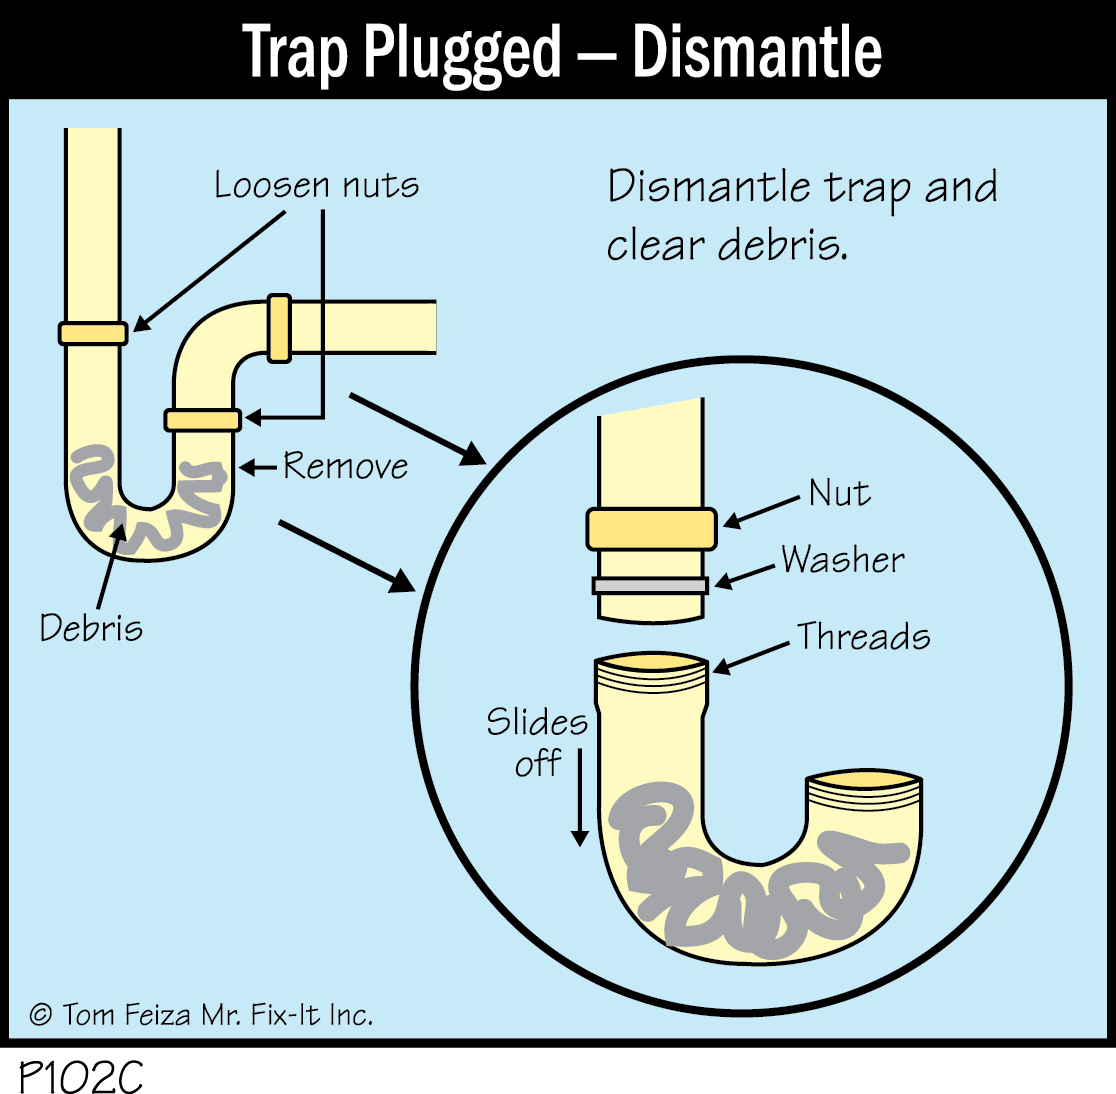 P102C - Trap Plugged - Dismantle